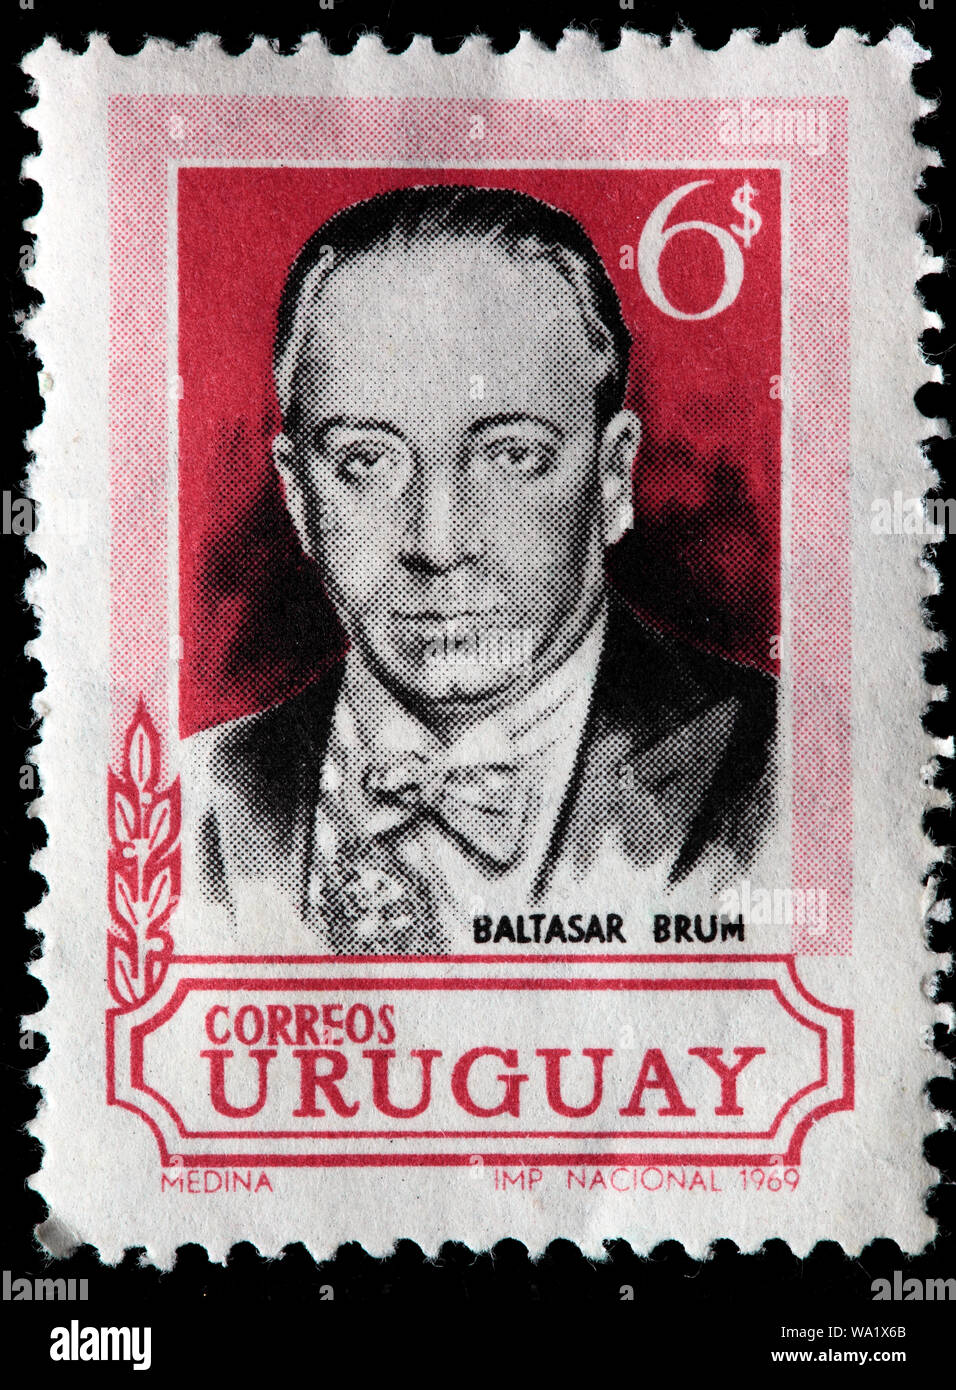 Baltasar Brum (1883-1933), Uruguayan politician, postage stamp, Uruguay, 1969 Stock Photo